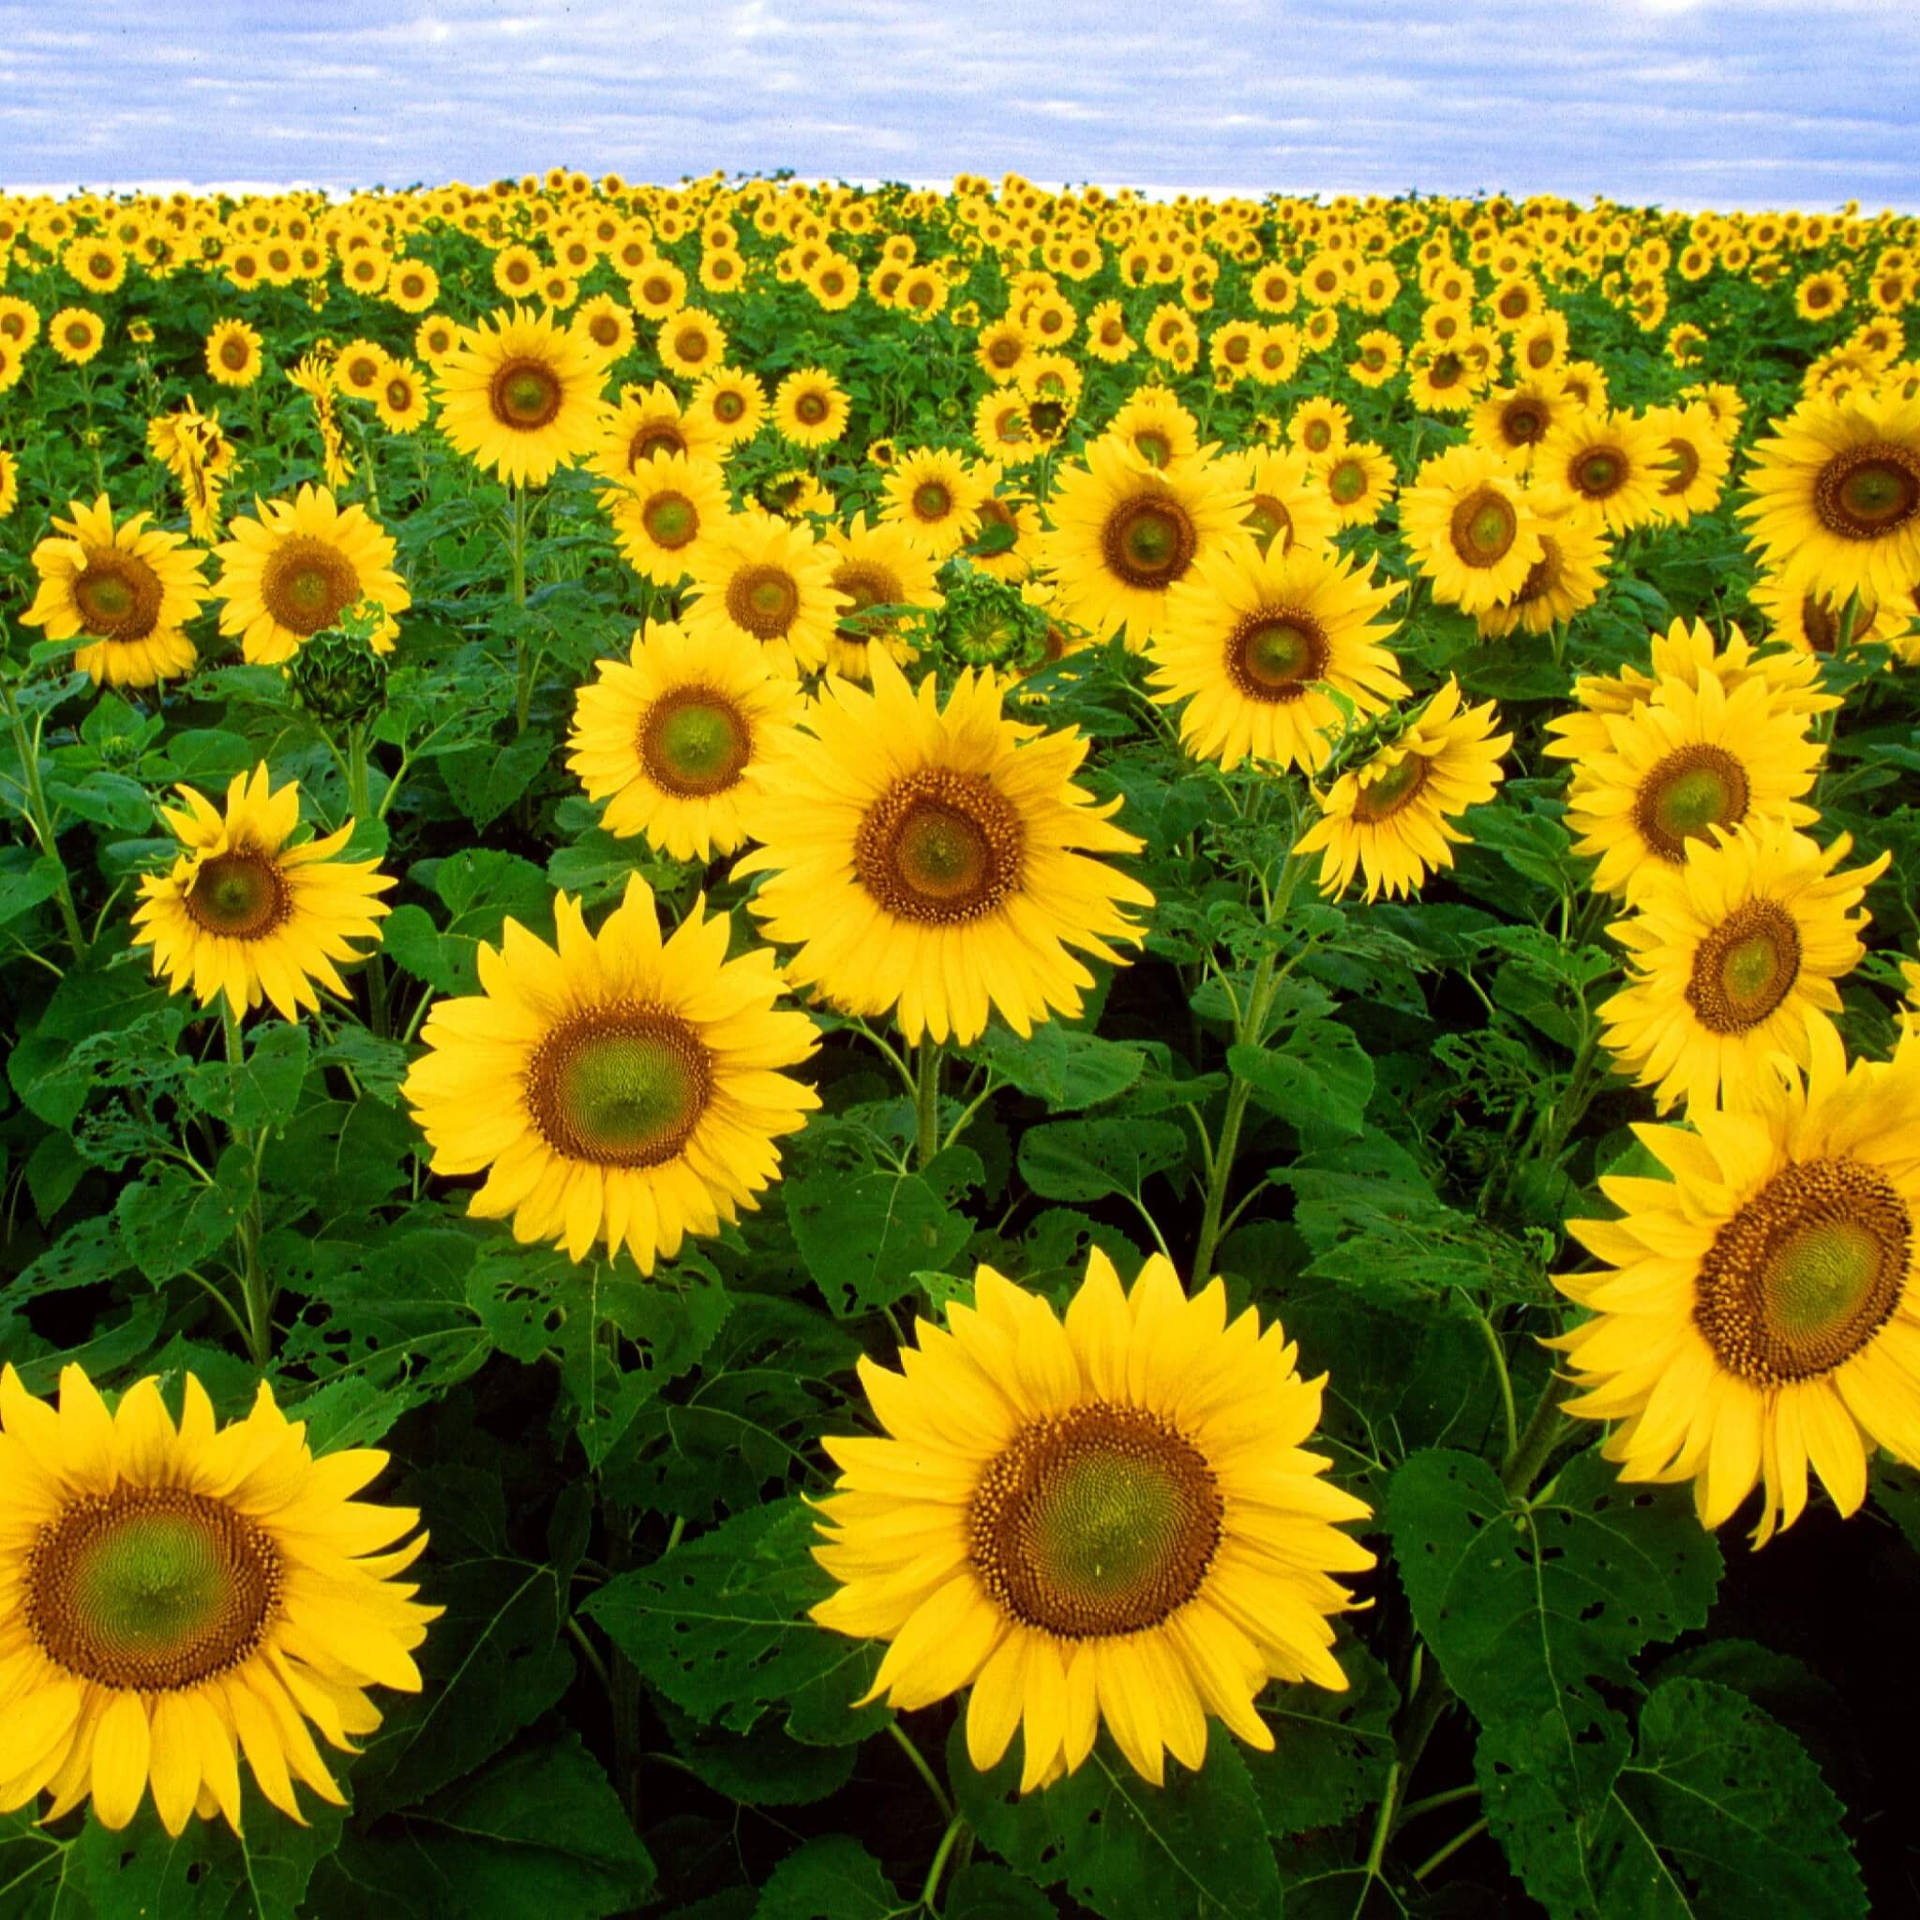 Sunflower Field Image